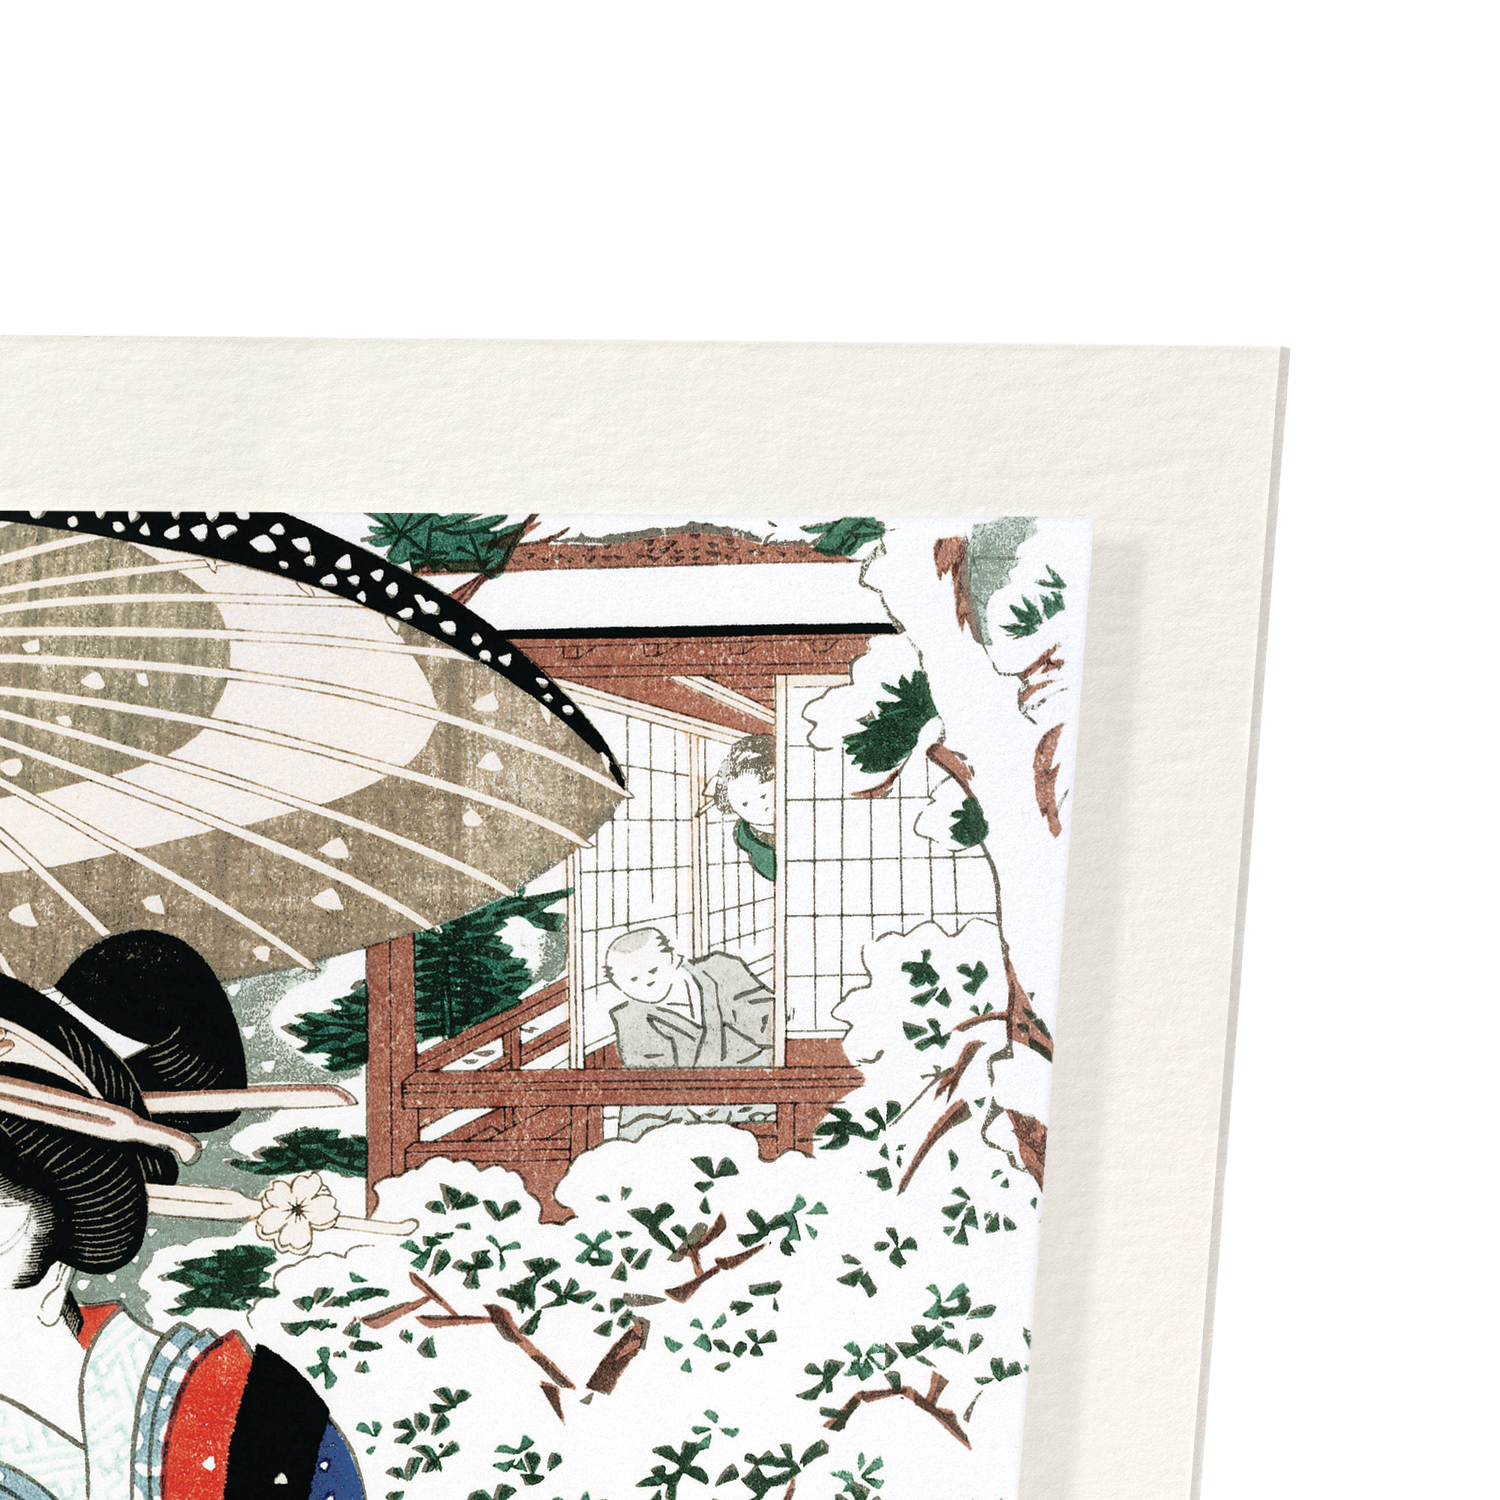 WINTER BEAUTY: Japanese Art Print